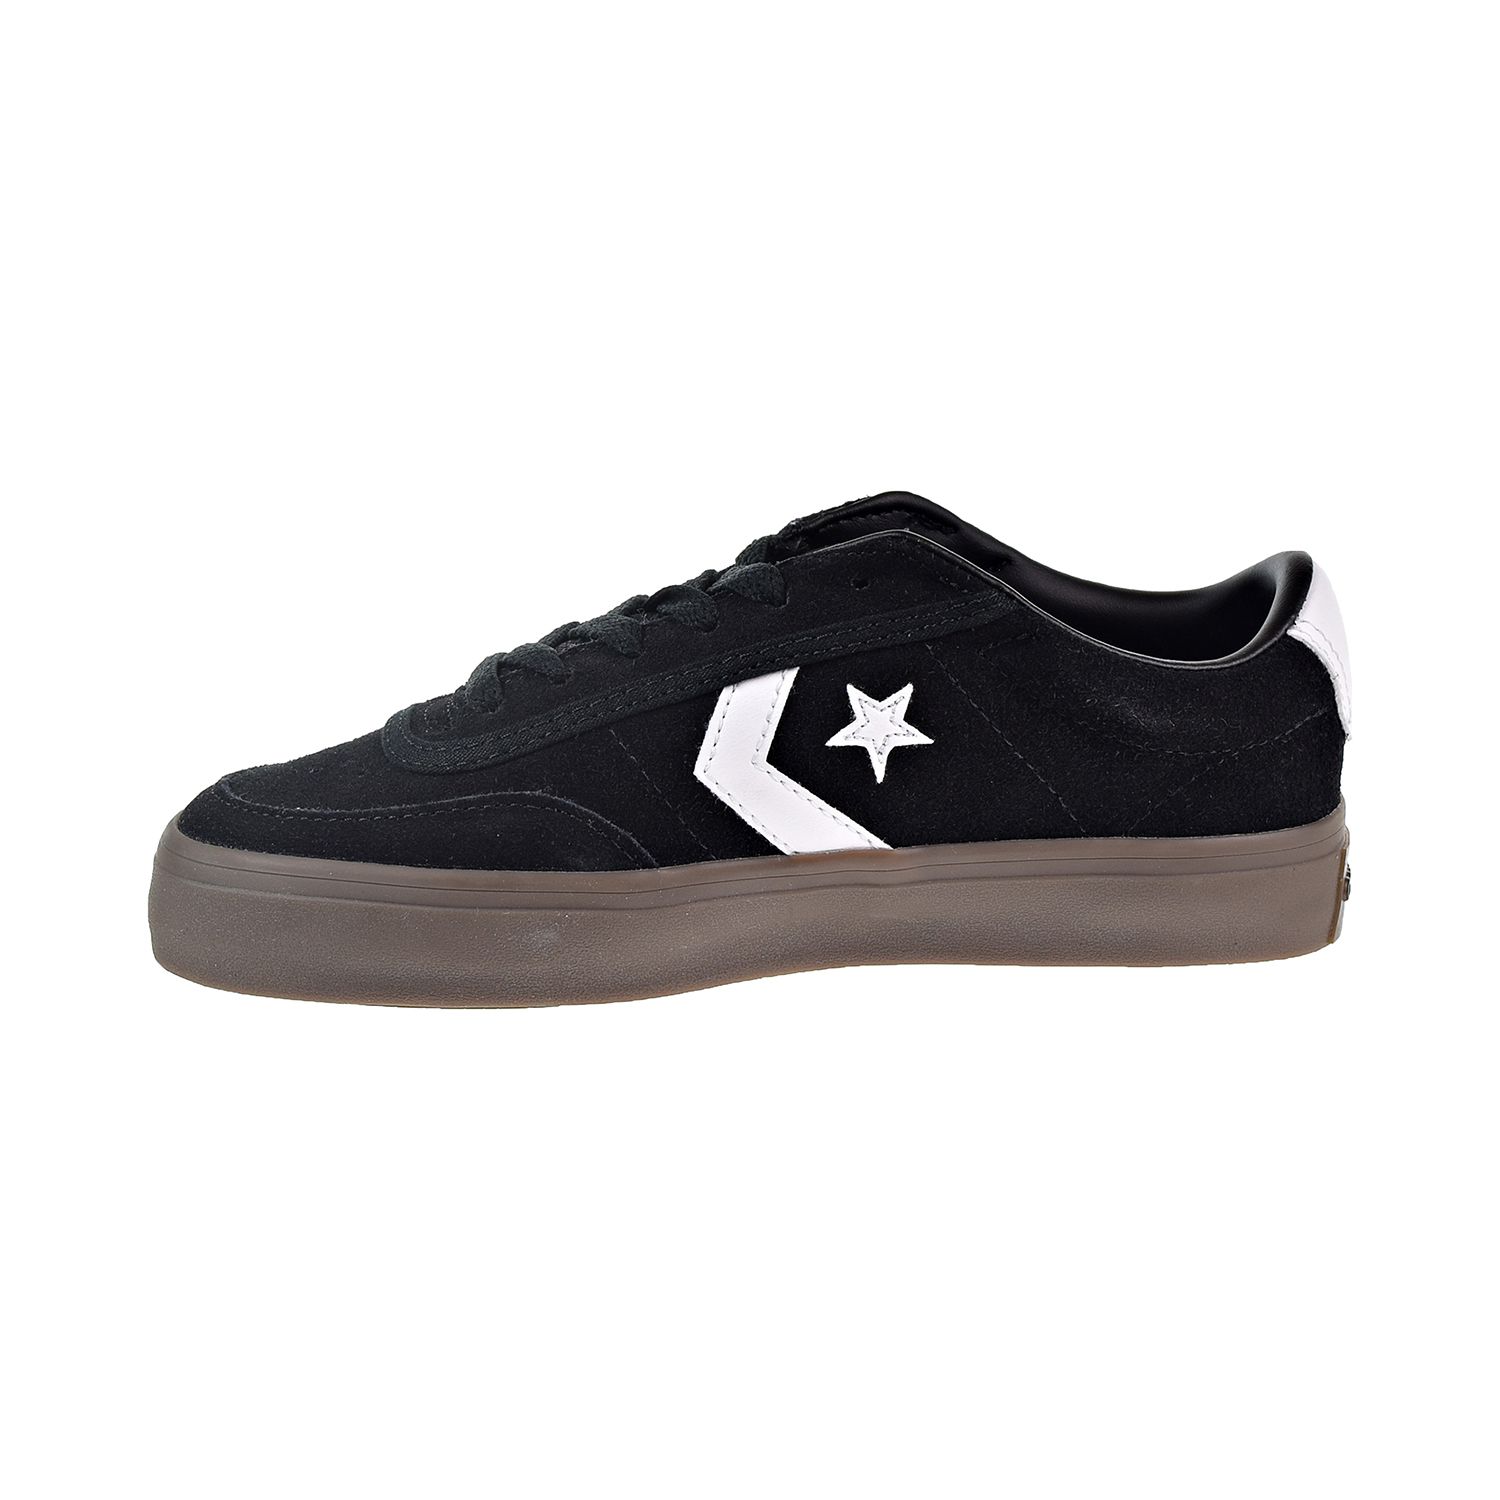 Converse Courtlandt OX Big Kids'/Men's Shoes Black-White-Brown 162570c - image 4 of 6